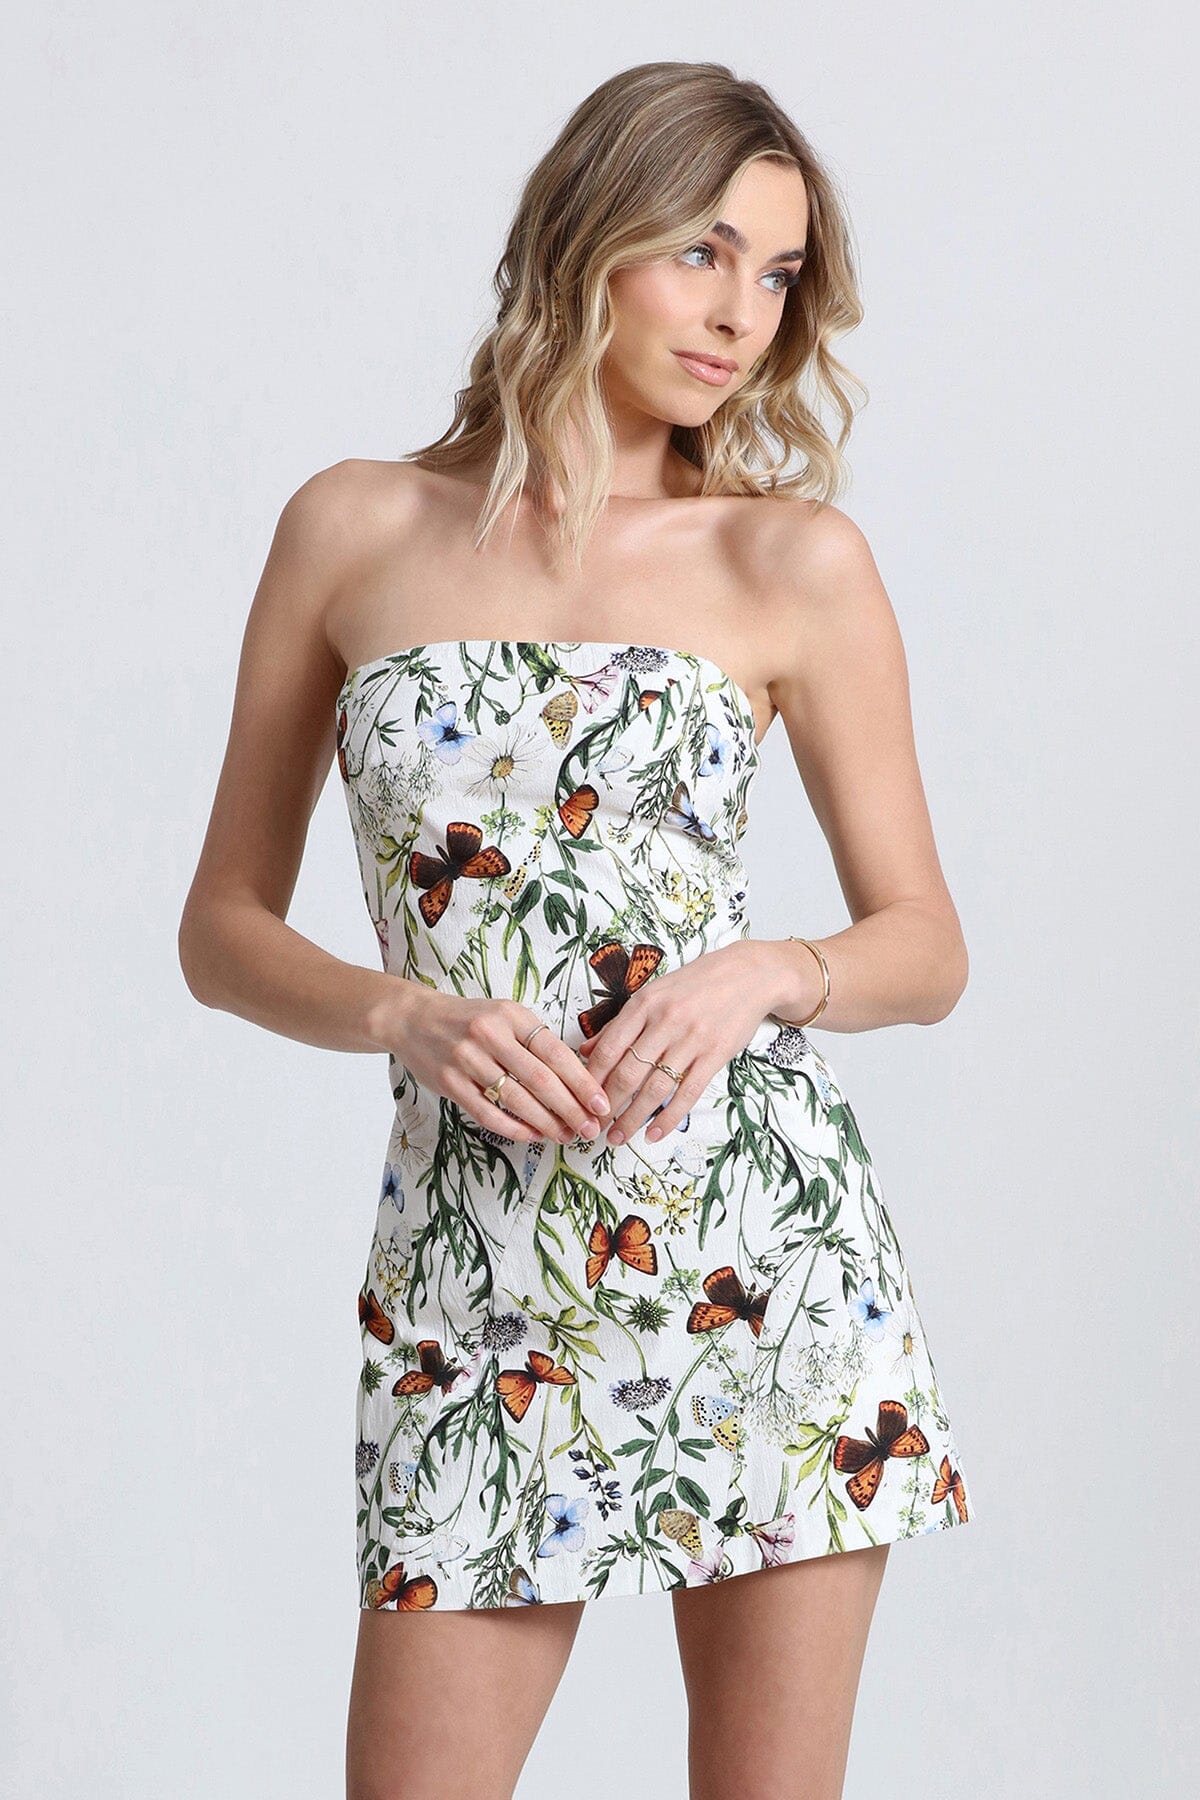 Botanical floral and butterflies stretch cotton mini dress - figure flattering bodycon spring brunch dresses for ladies by Avec Les Filles